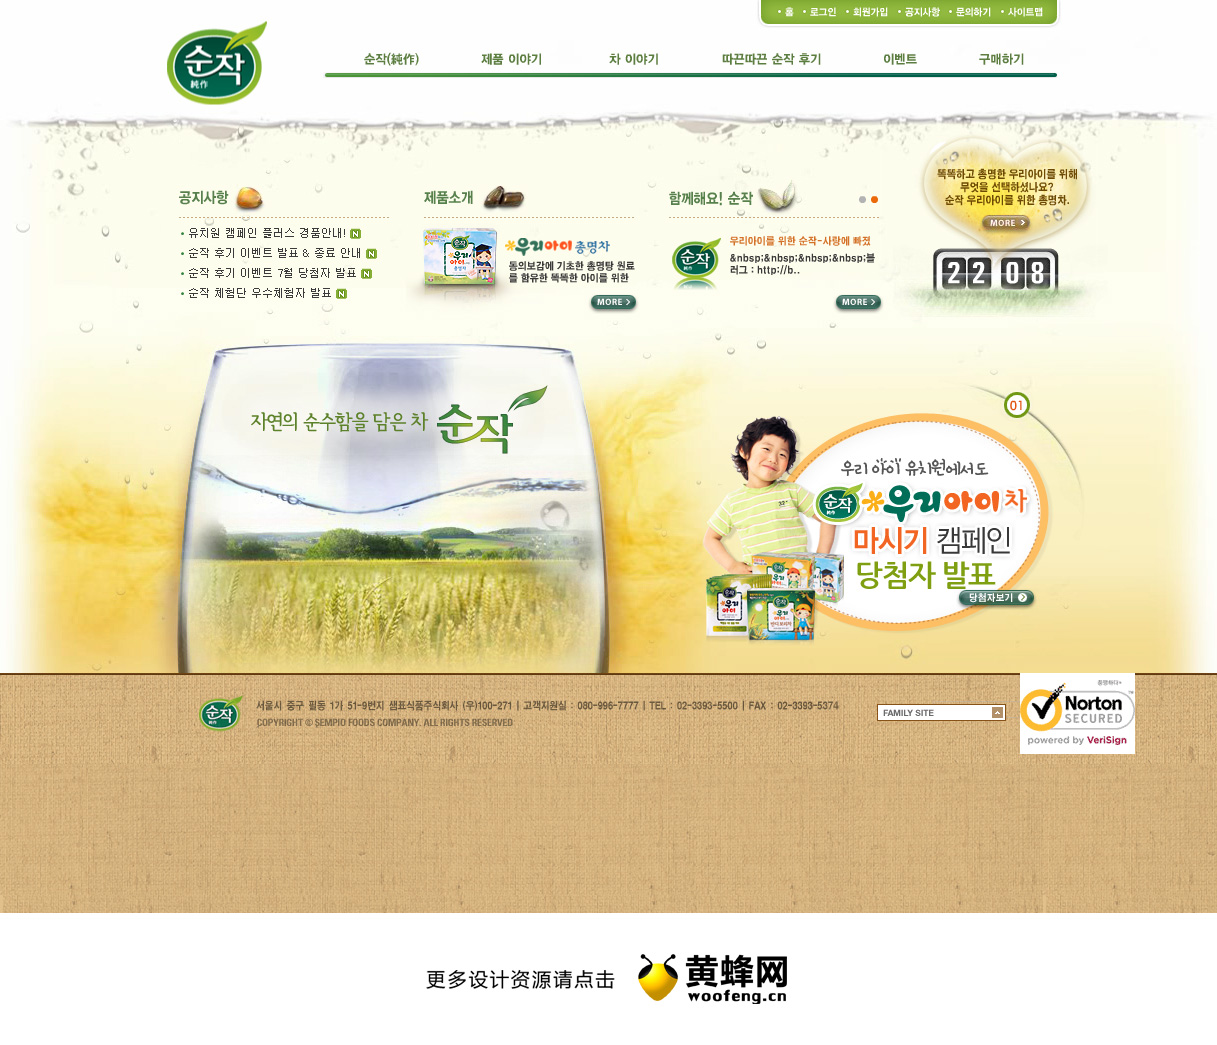 sunjak韩国茶叶品牌网站，来源自黄蜂网https://woofeng.cn/